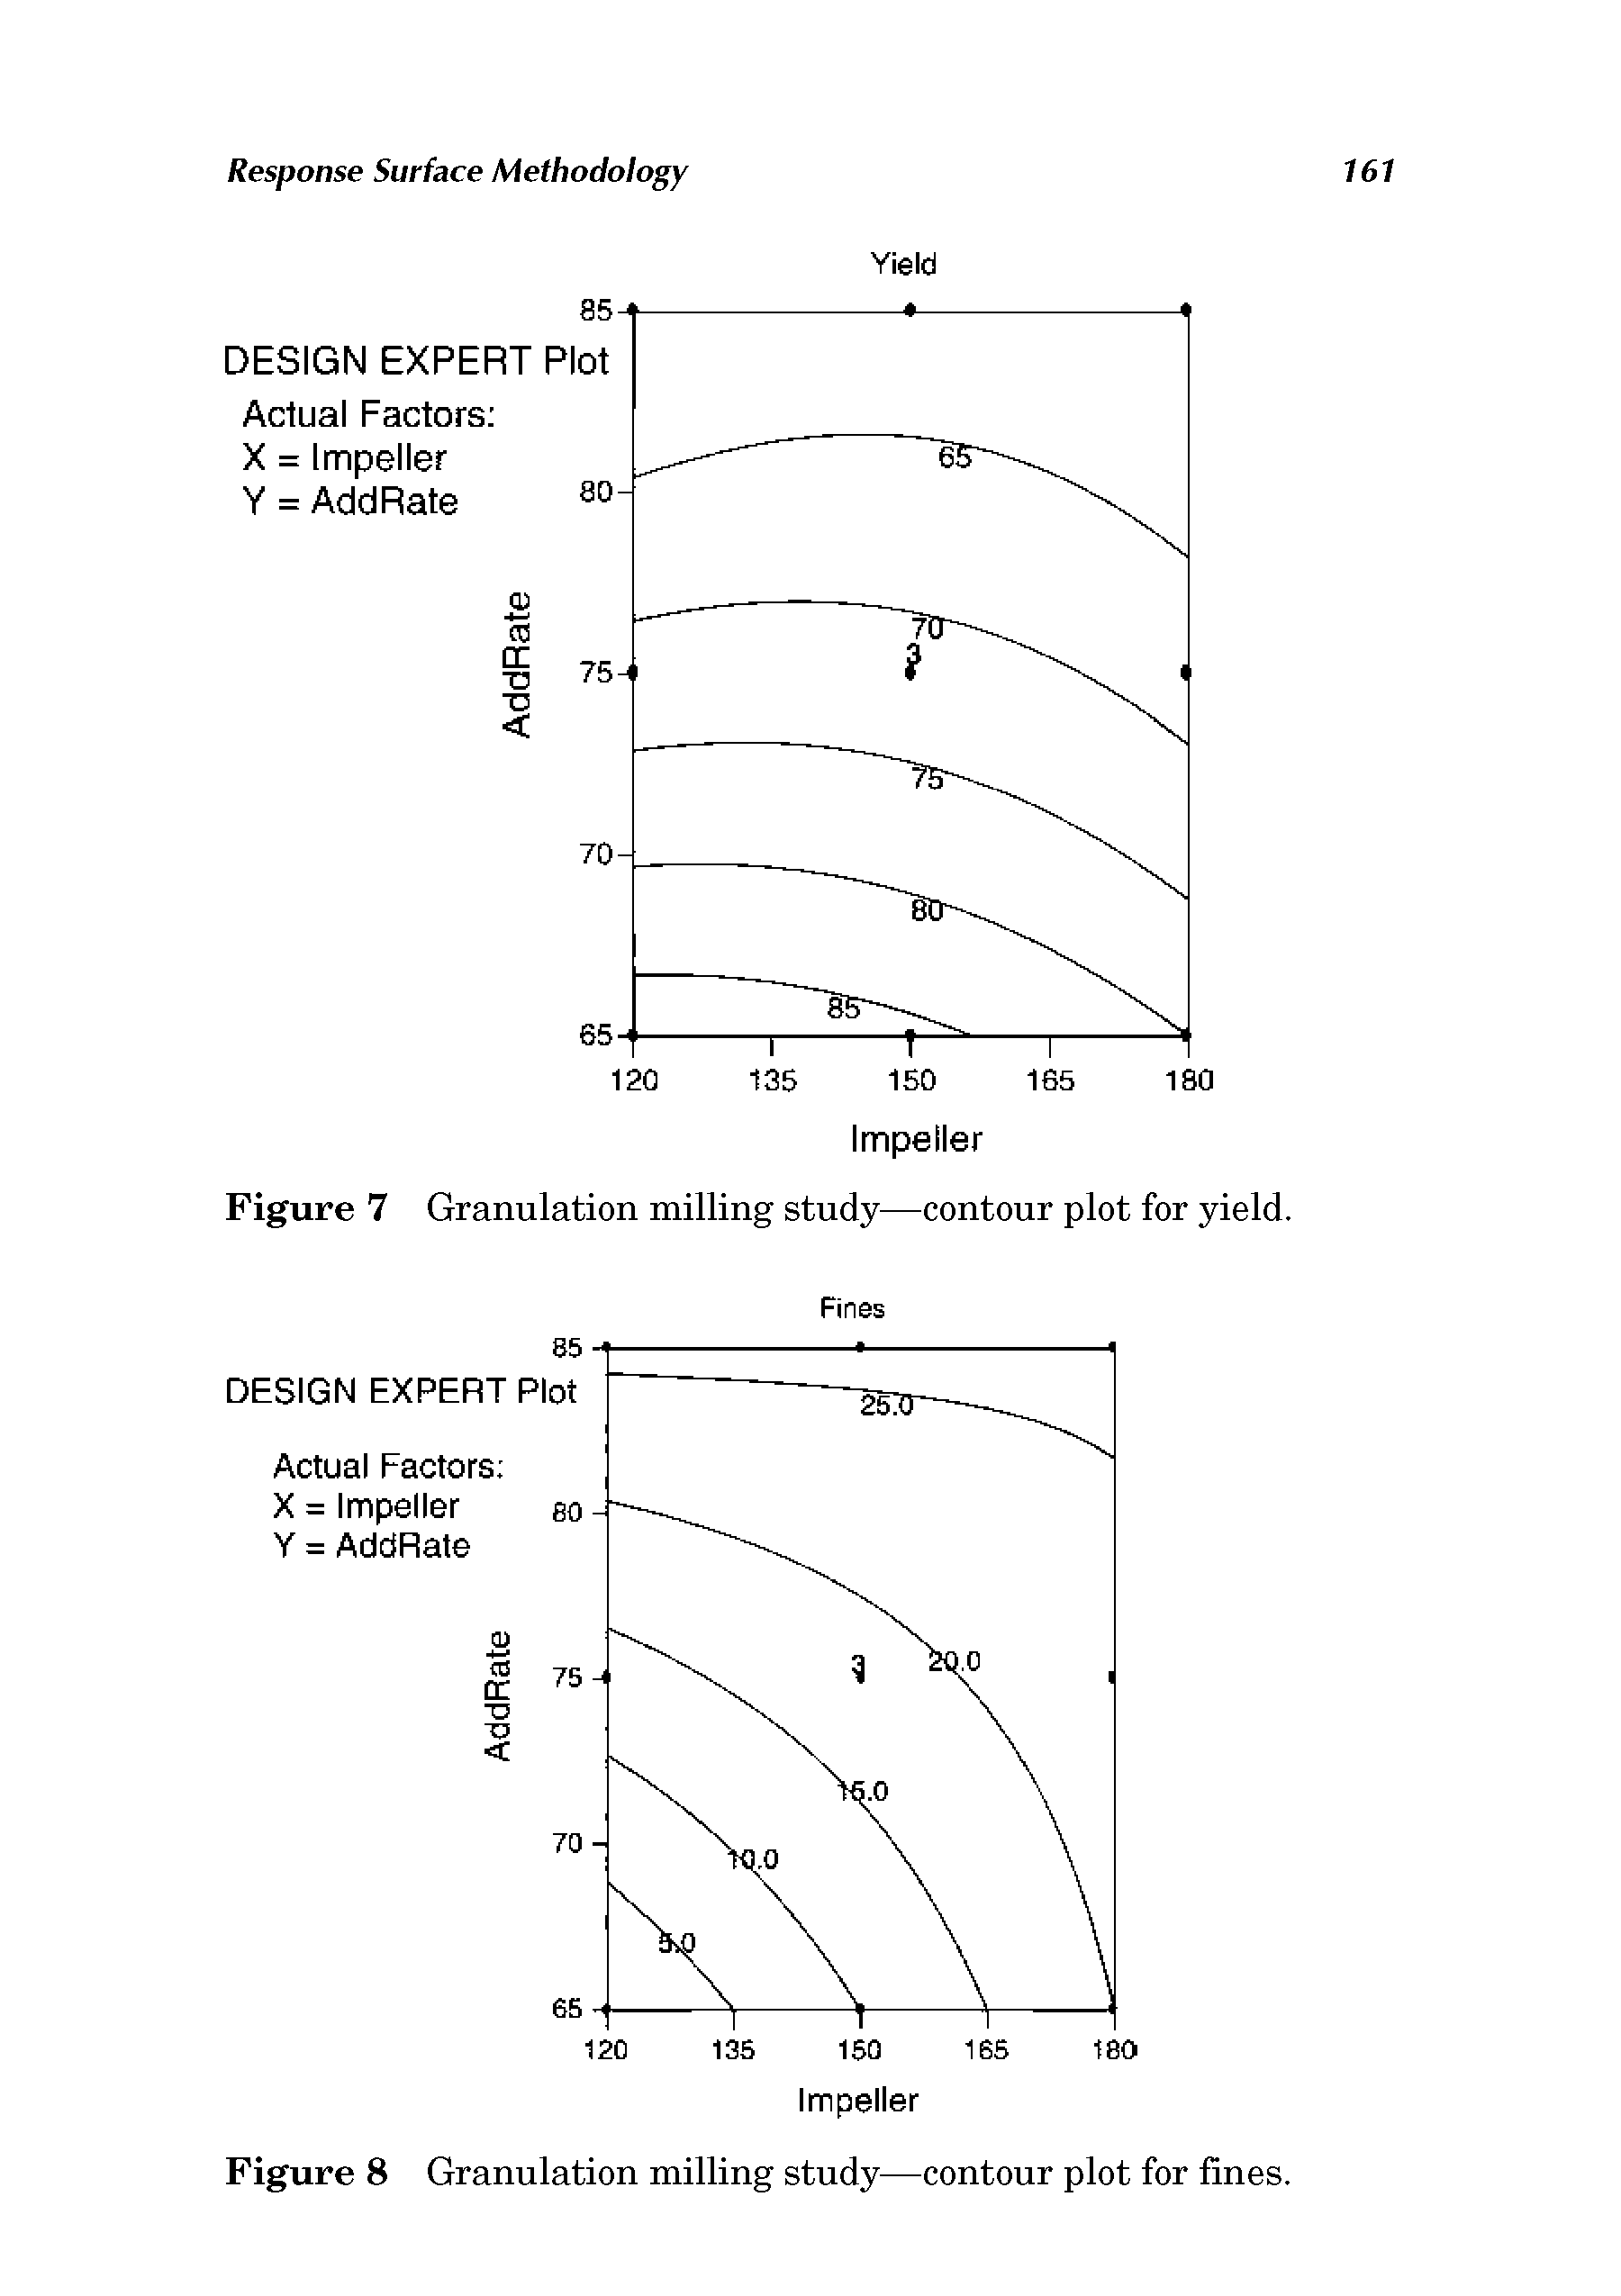 Figure 7 Granulation milling study—contour plot for yield.